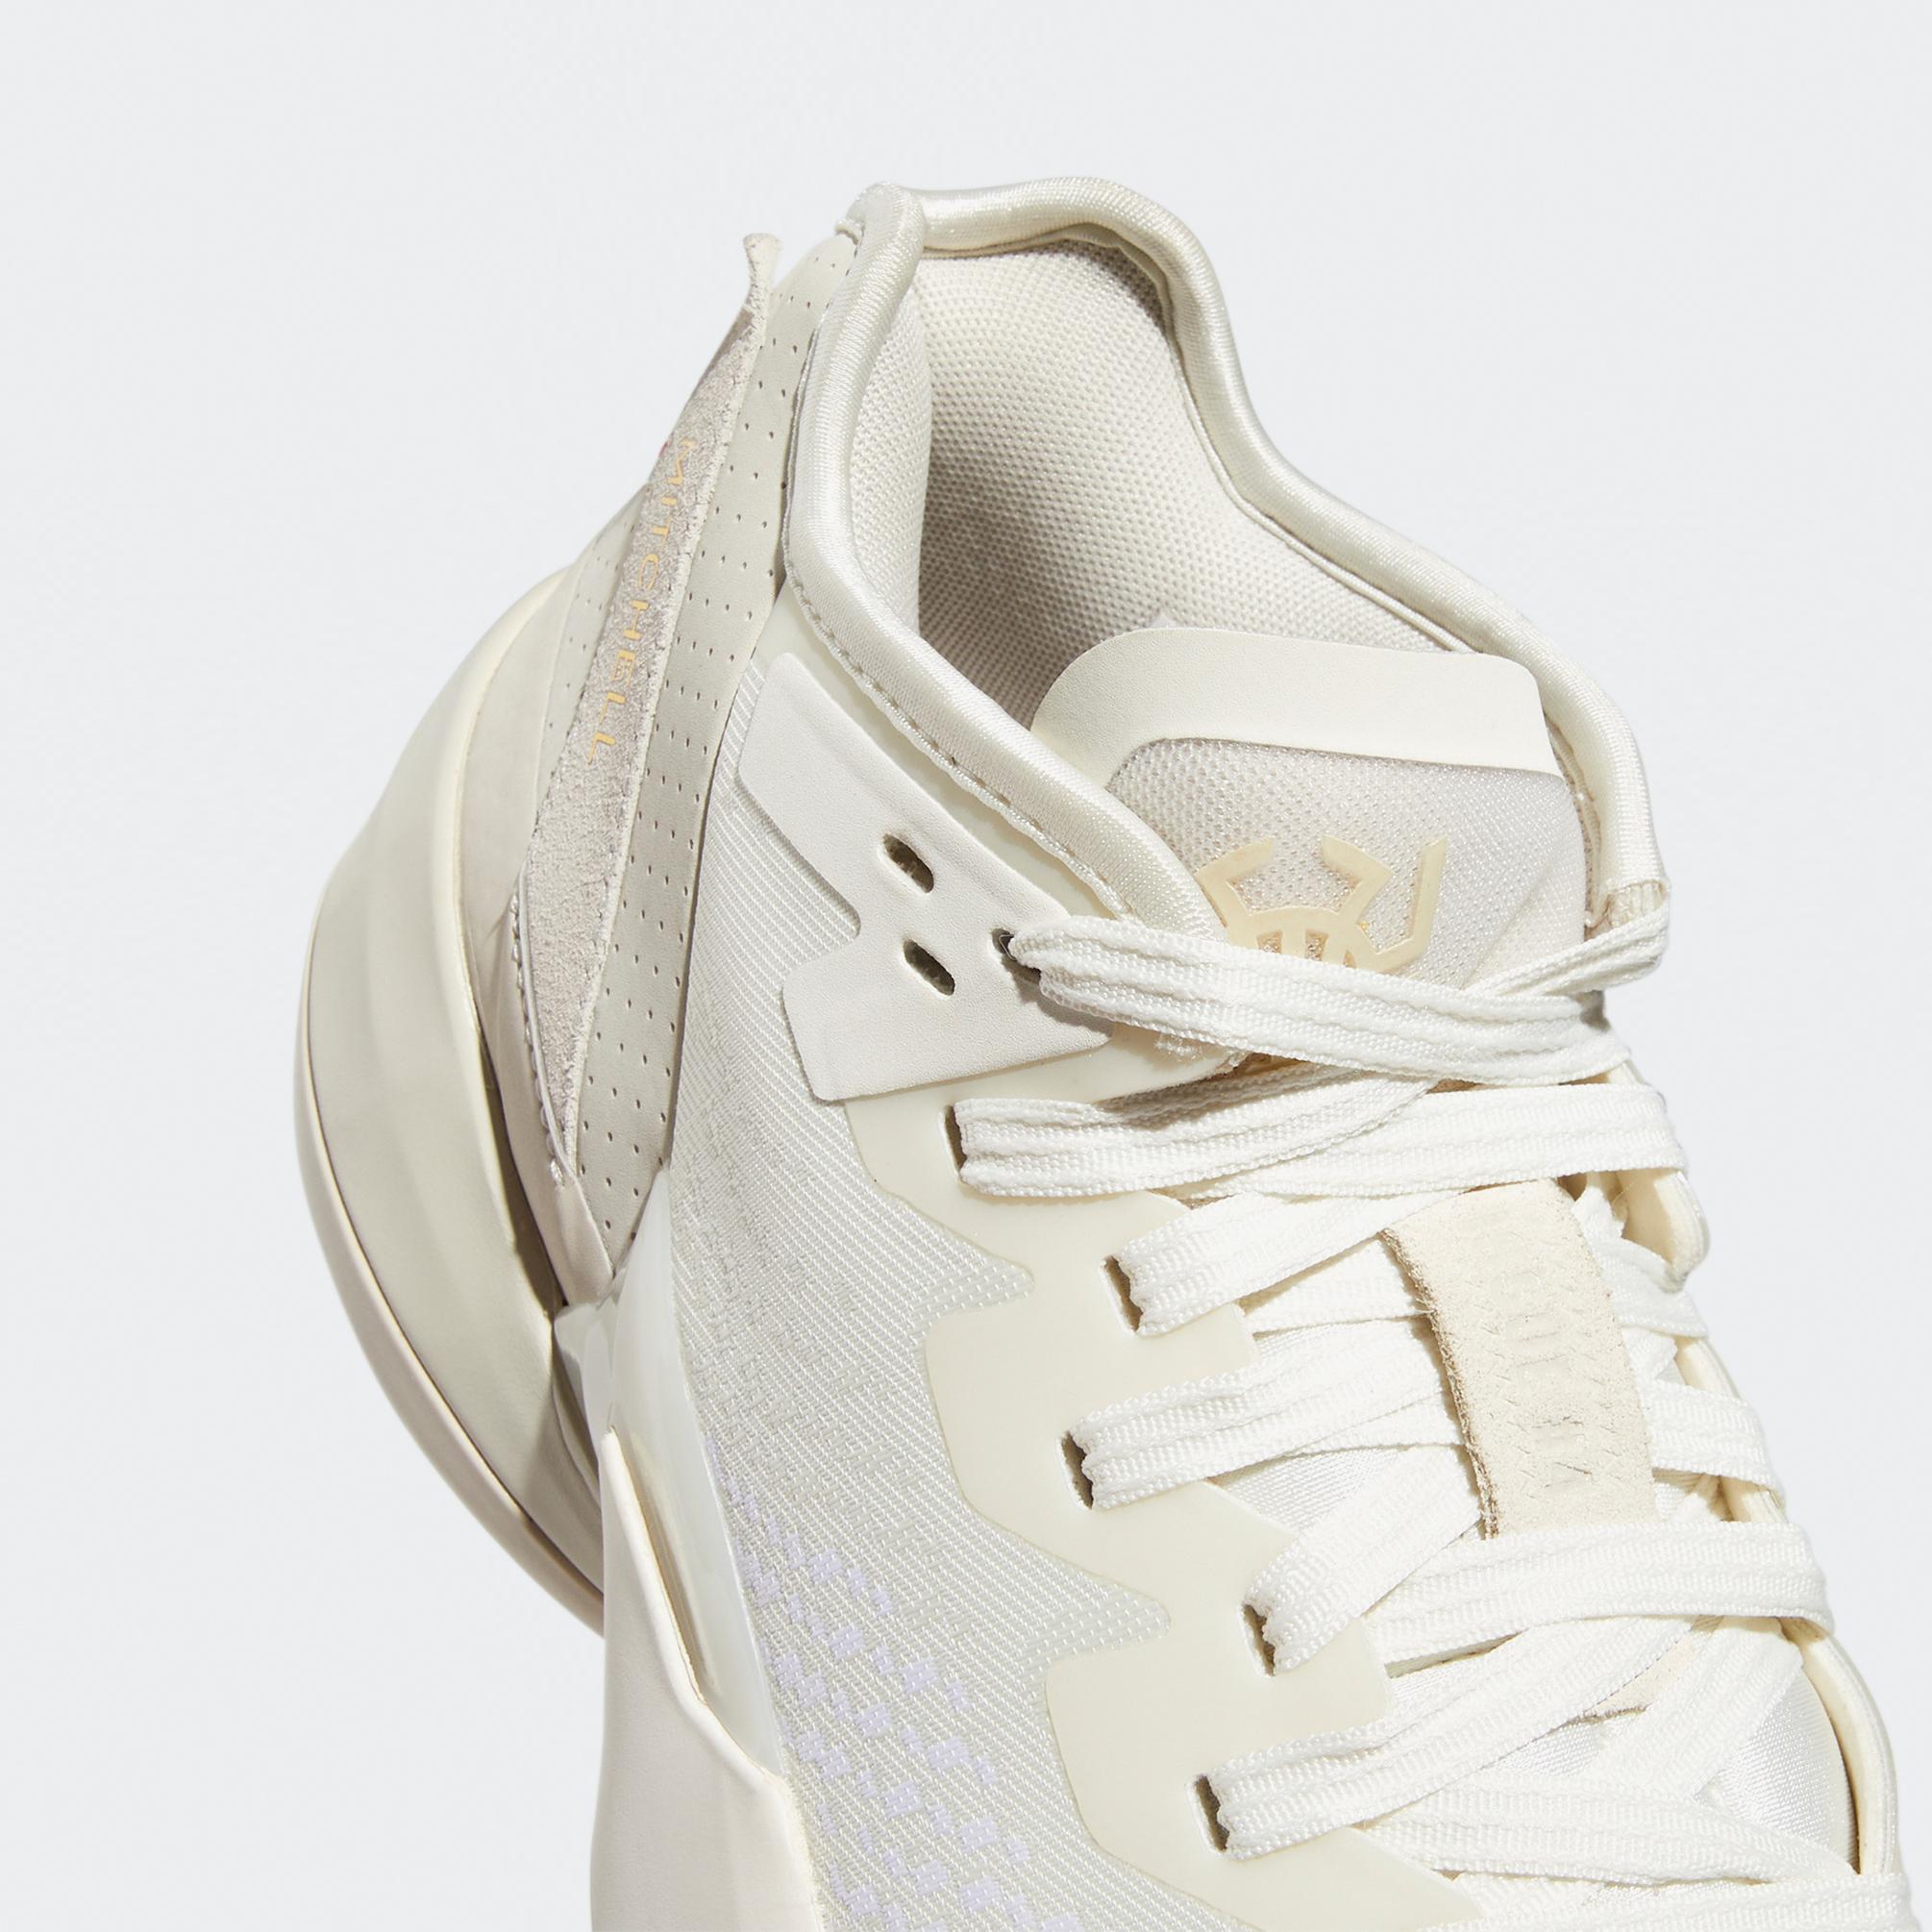  adidas D.O.N. Issue 4 Unisex Beyaz Spor Ayakkabı